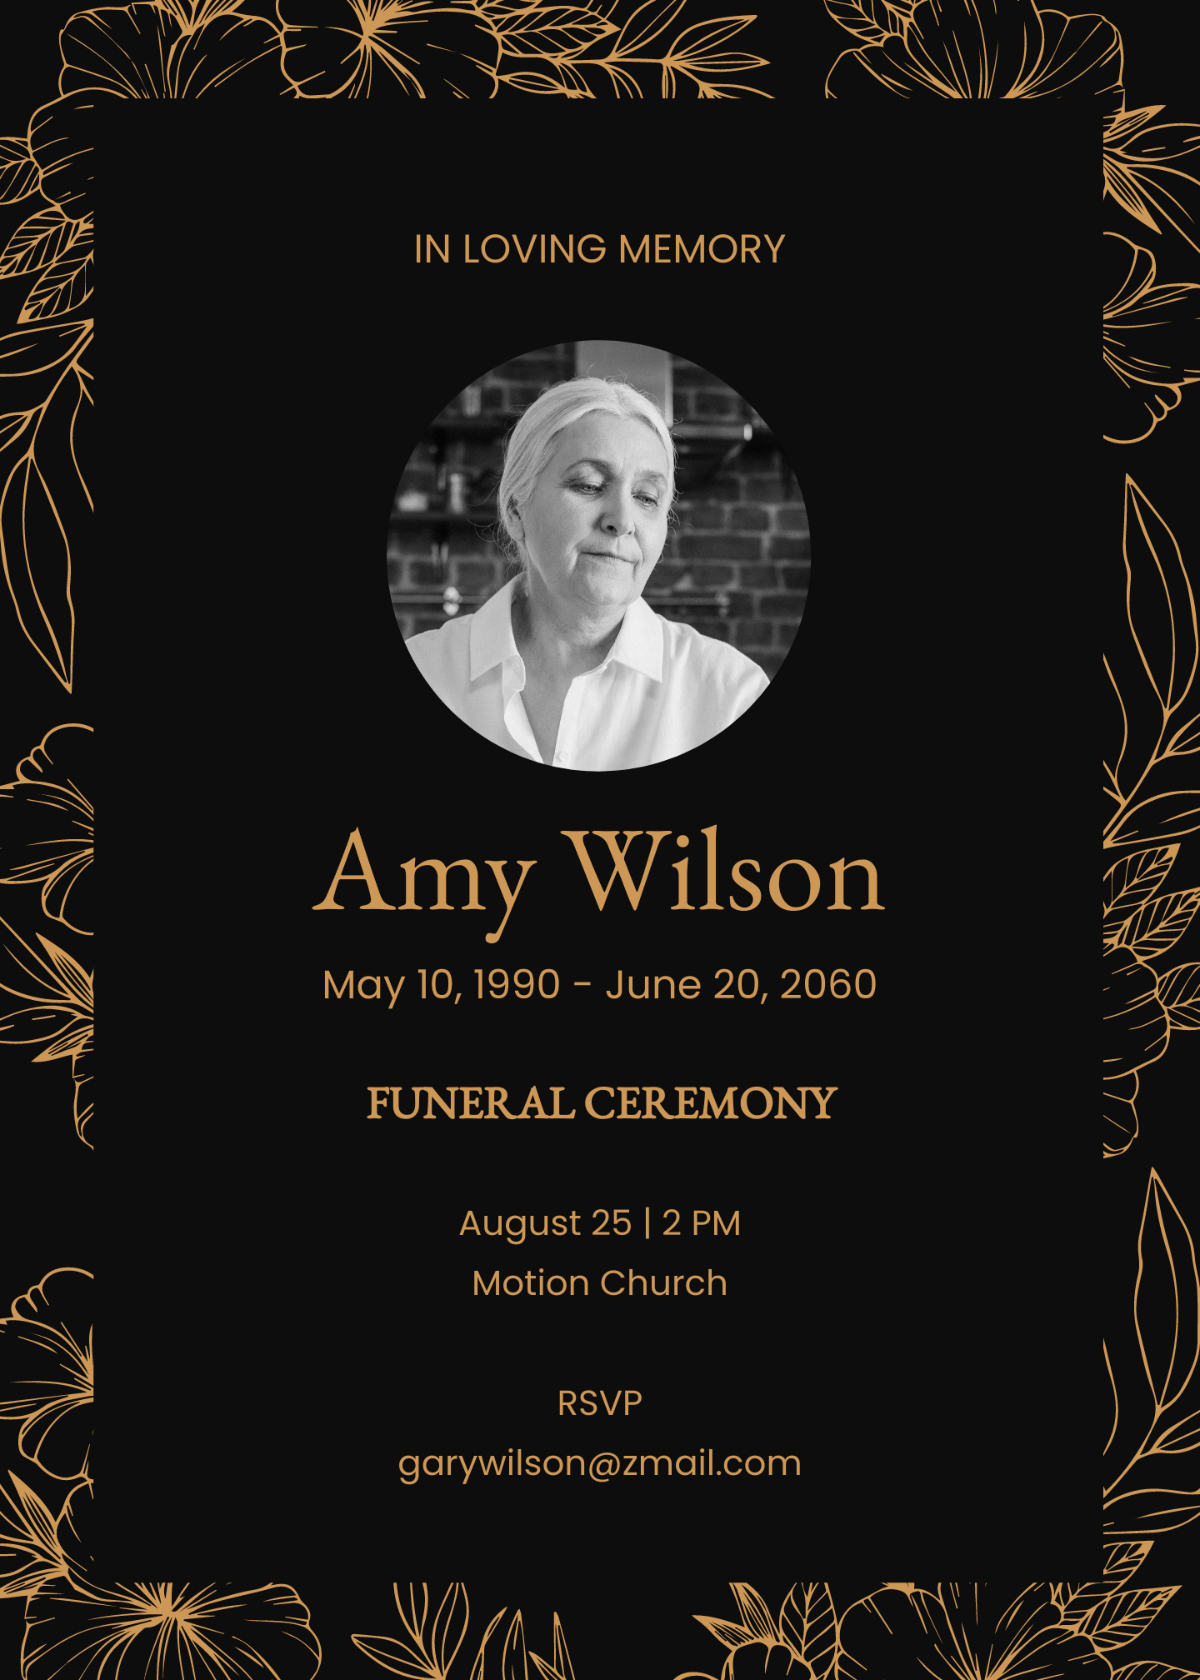 Funeral Invitation Card design Template